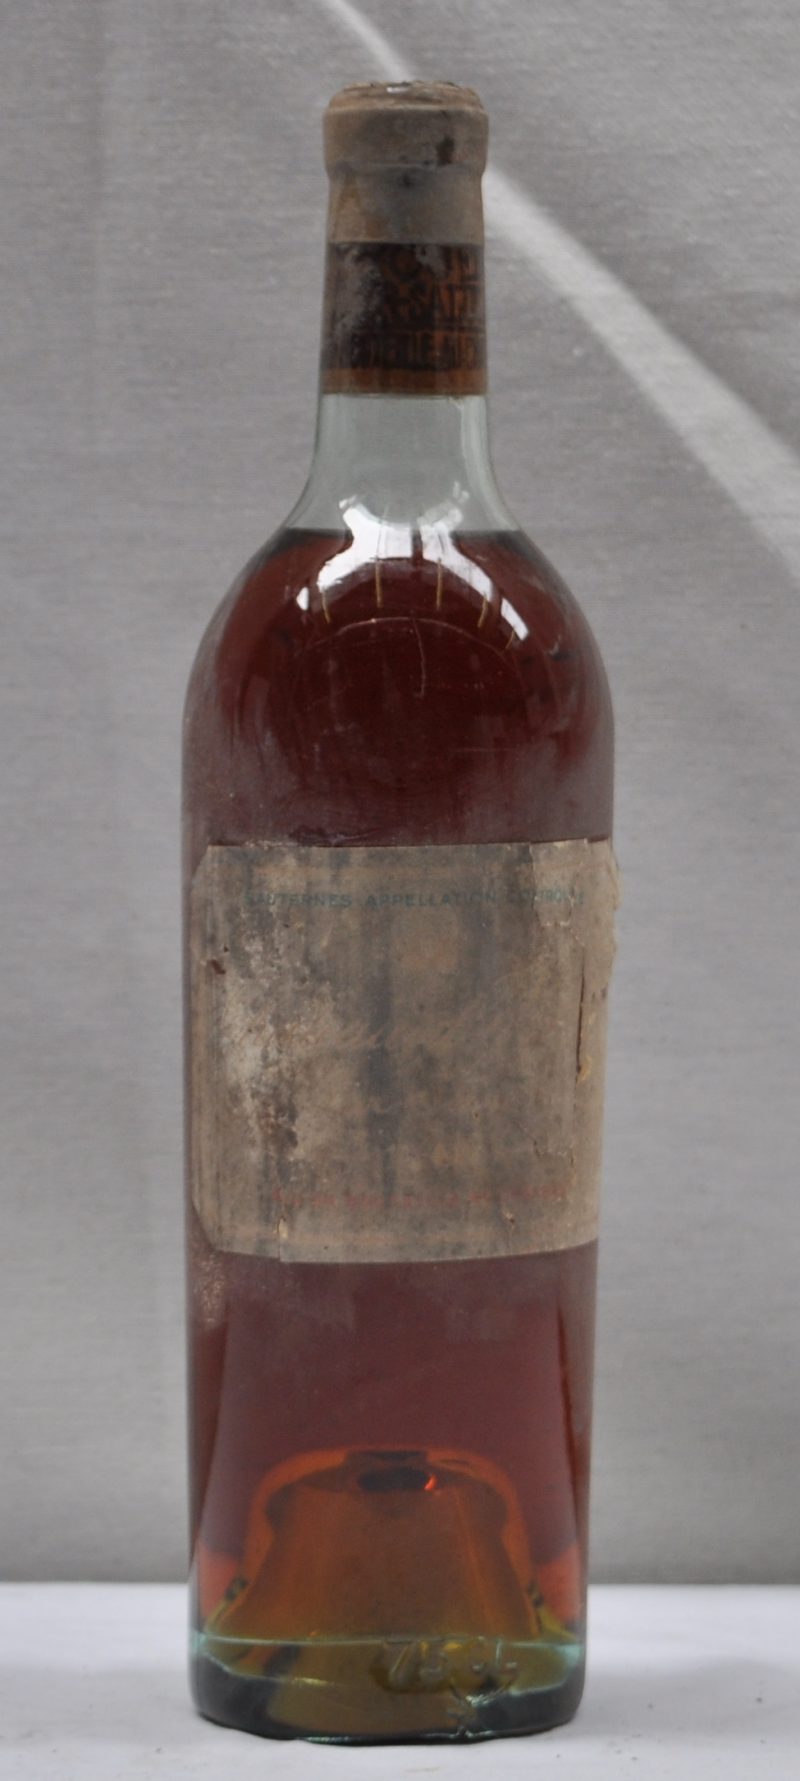 Ch. d’Yquem A.C. Sauternes 1e grand cru classé  M.C.  1948  aantal: 1 Bt. etiket vervaagd